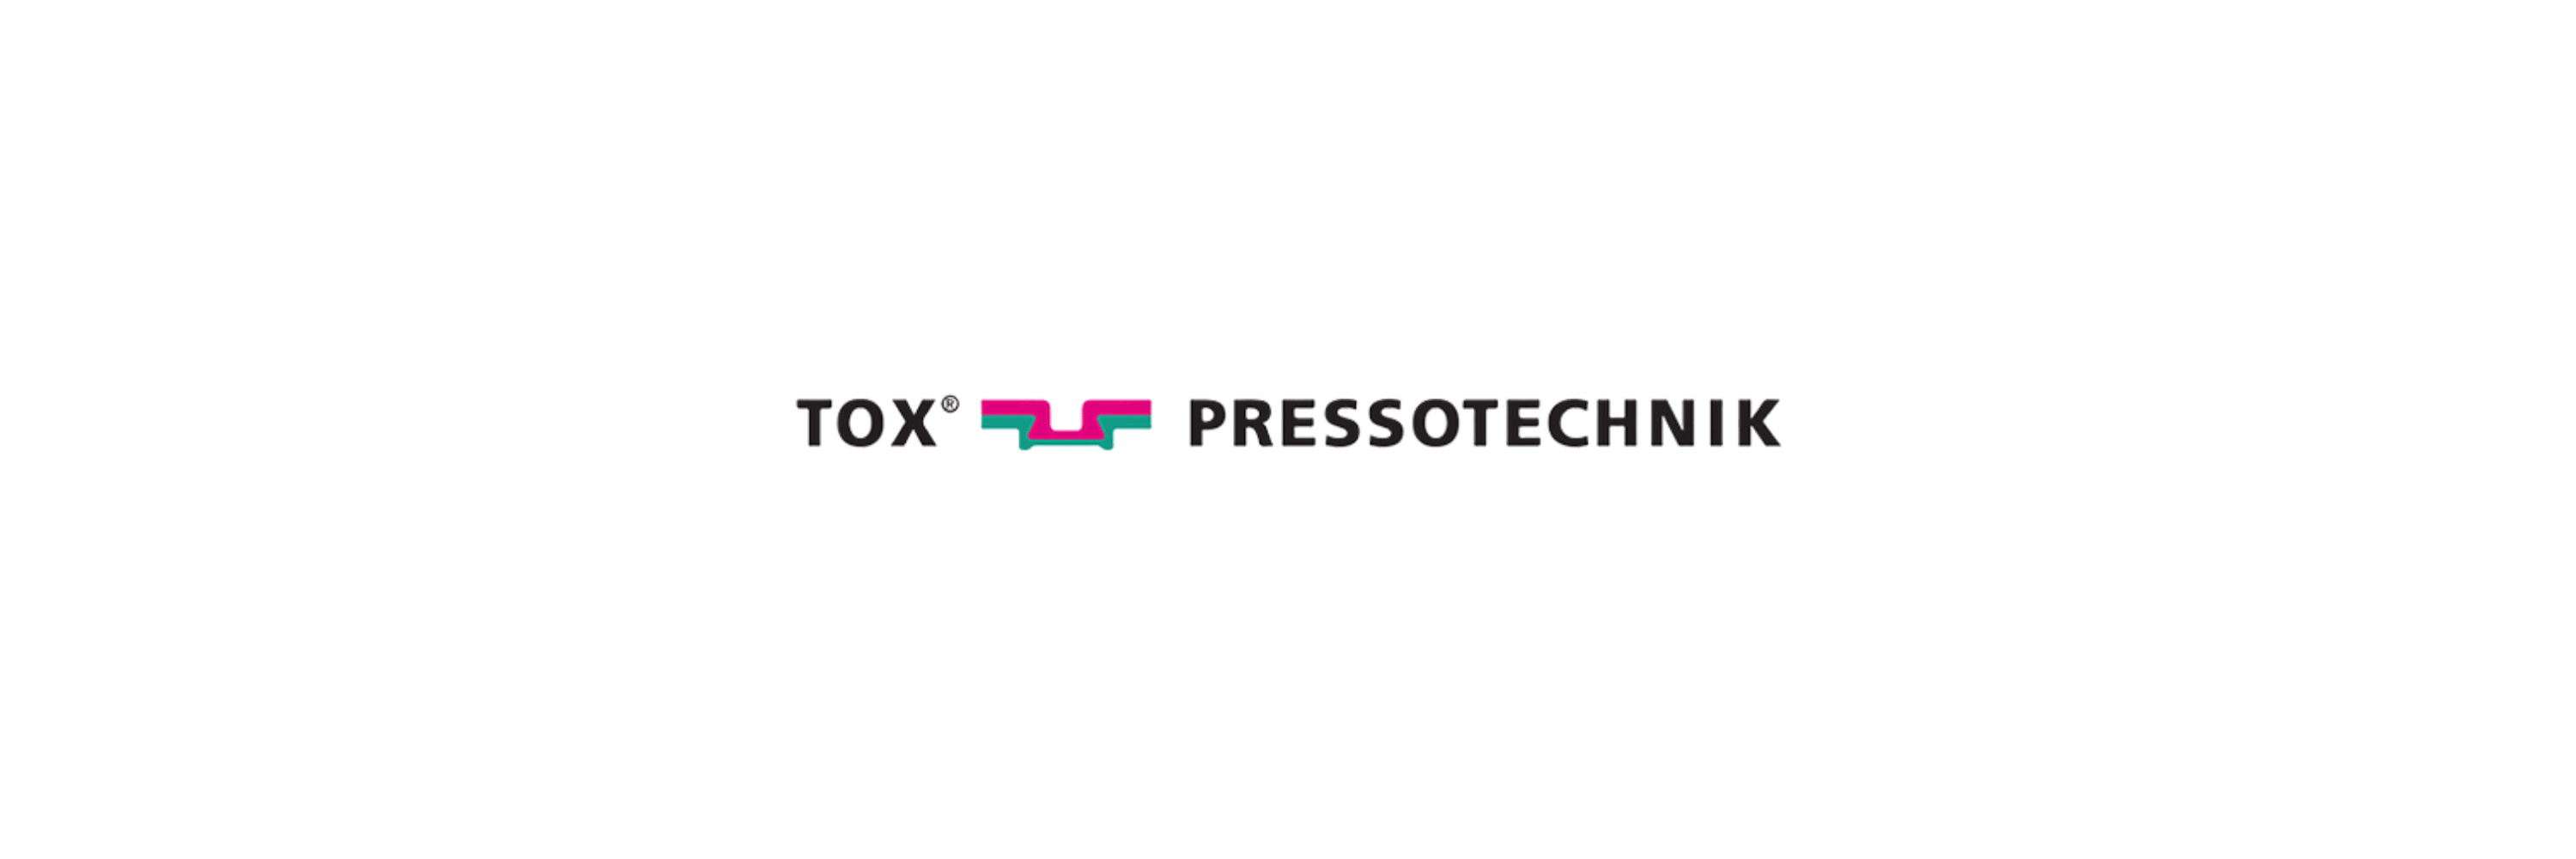 TOX PRESSOTECHNIK - Klenk Maschinenhandel